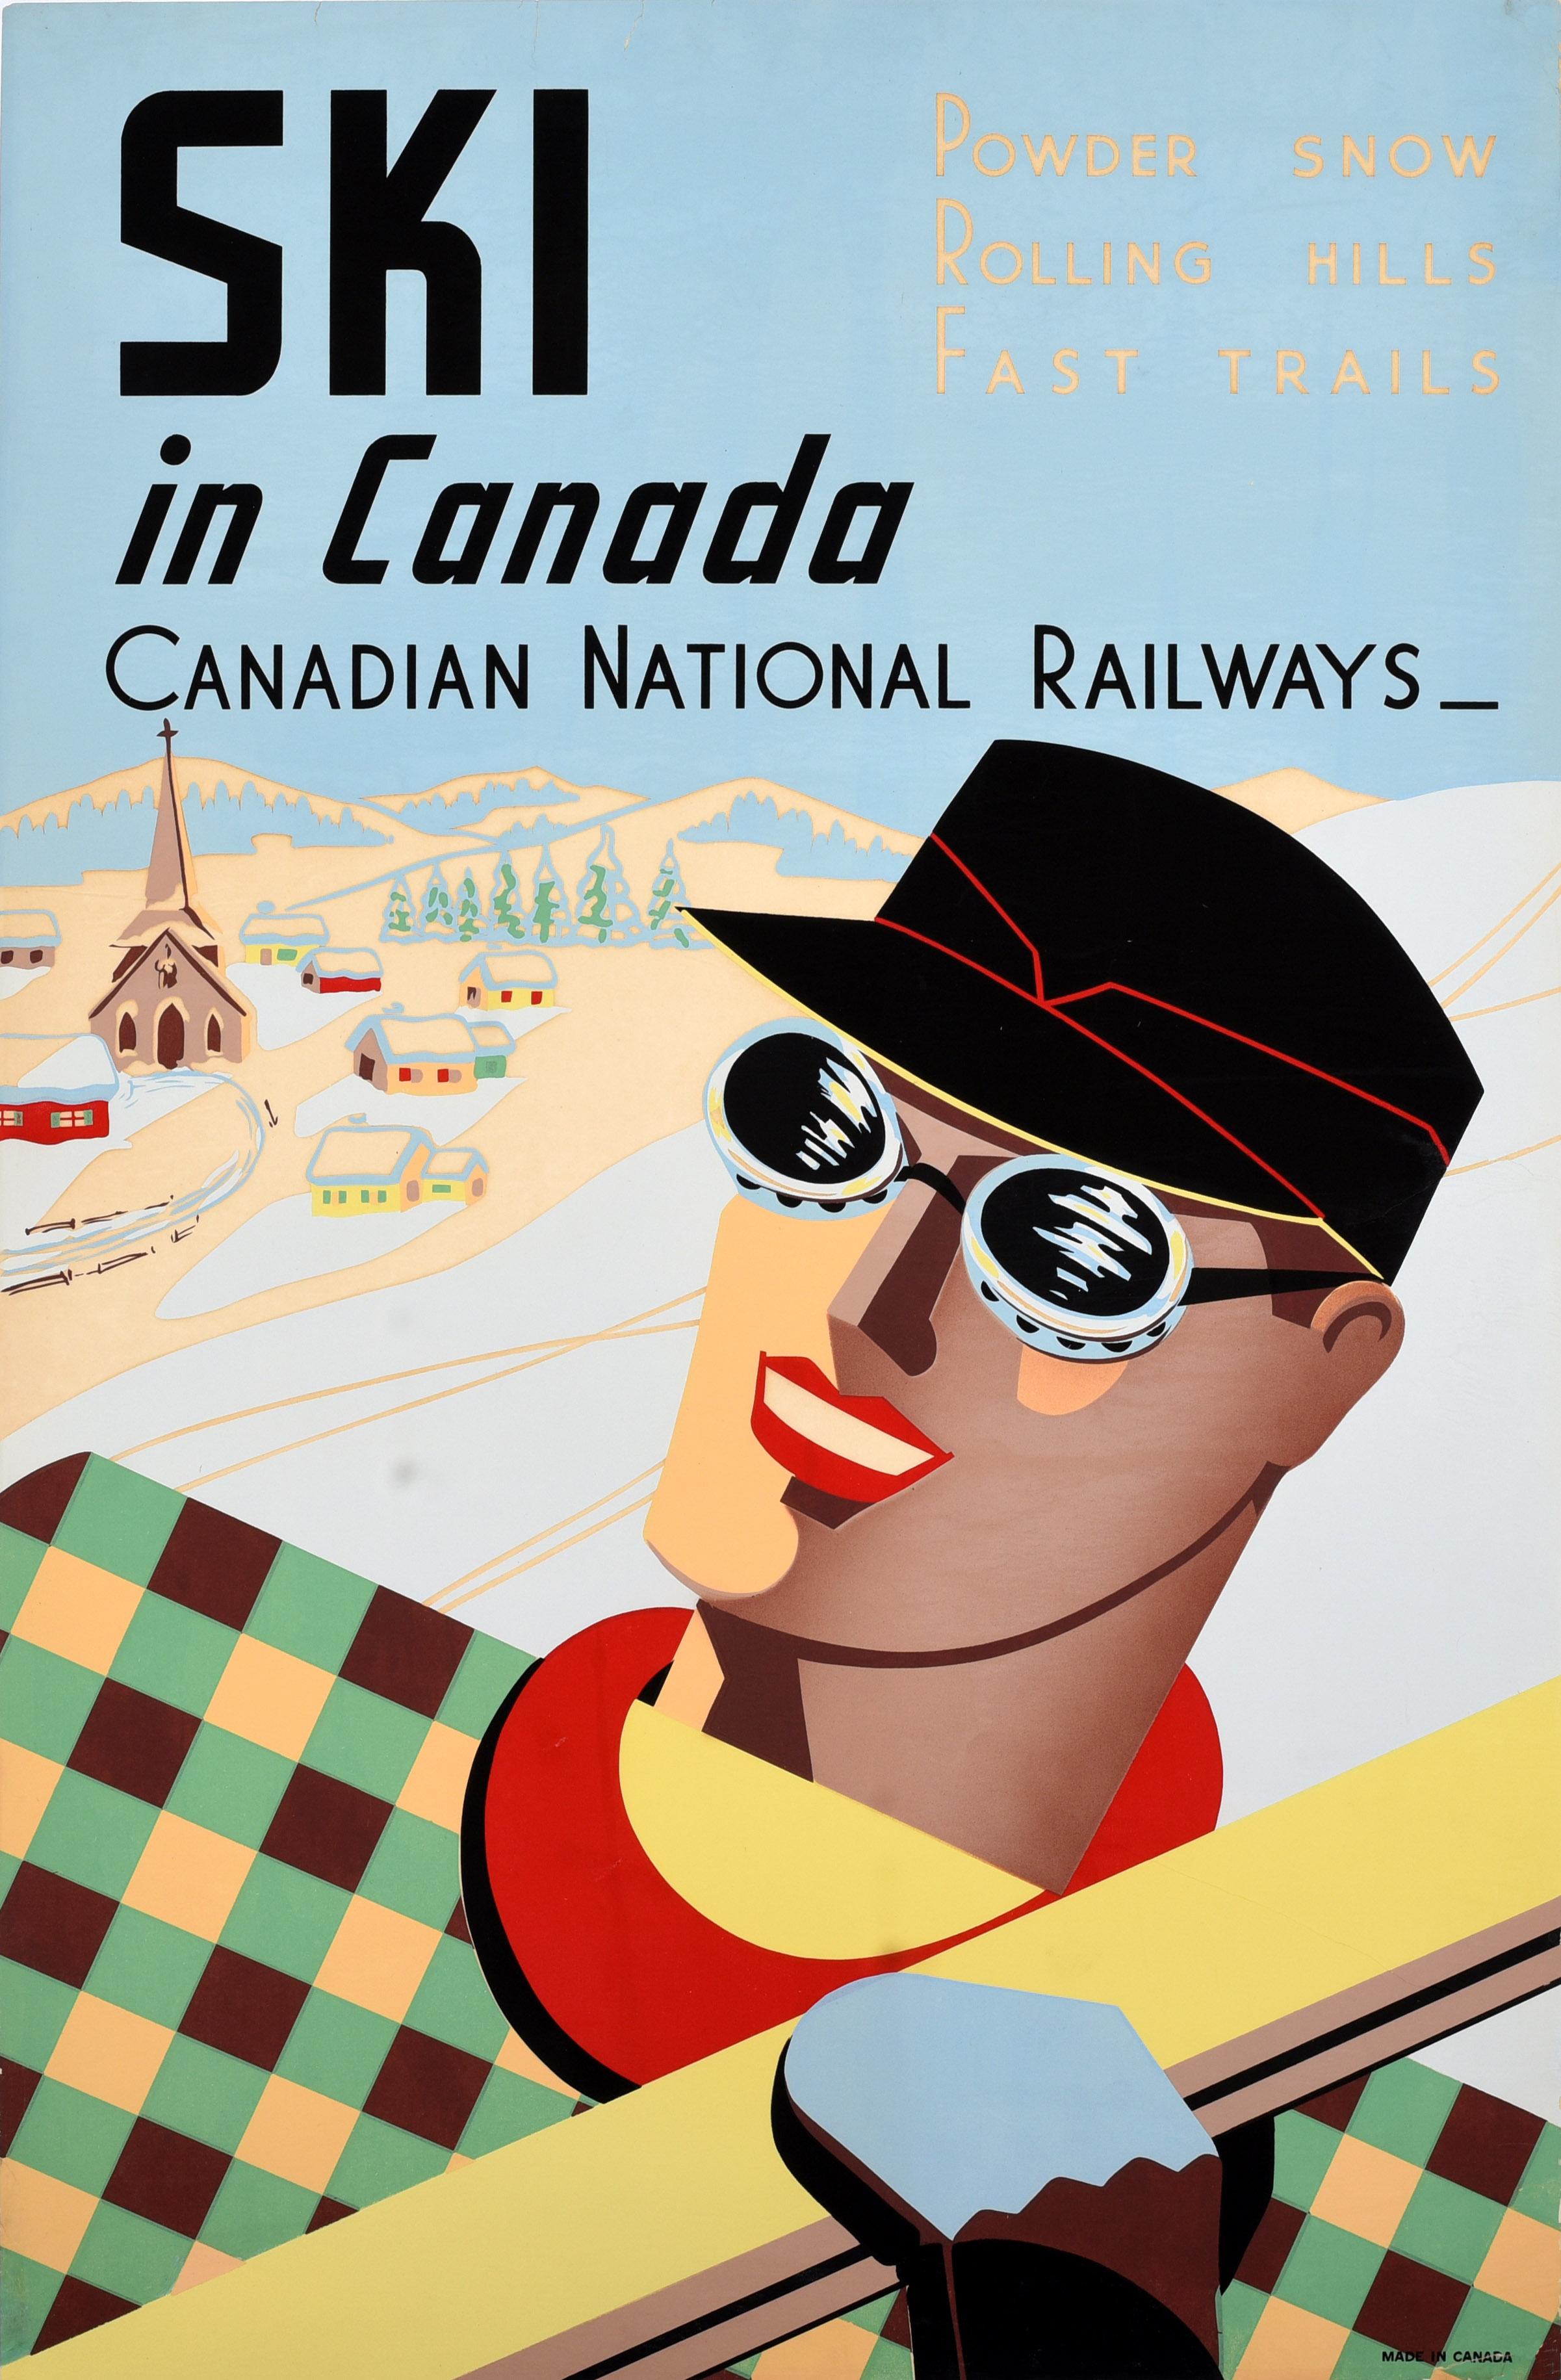 Unknown Print - Original Vintage Winter Sport Poster Ski In Canada Canadian National Railways